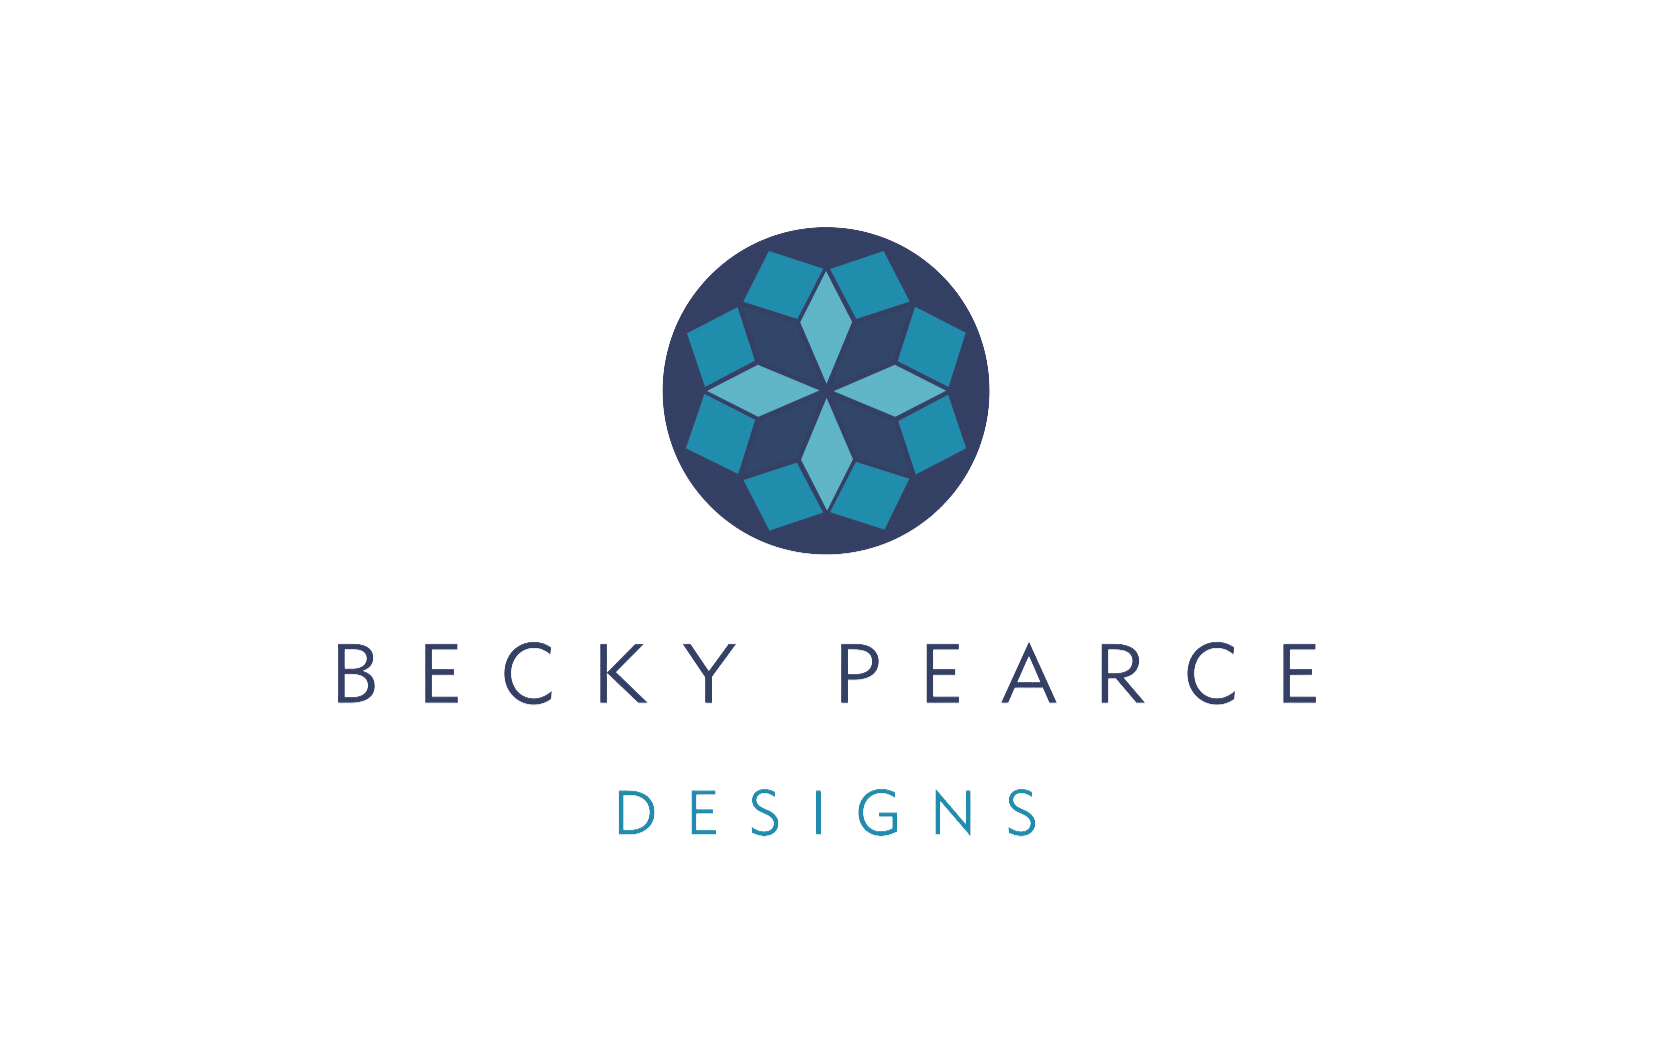 Becky Pearce Designs